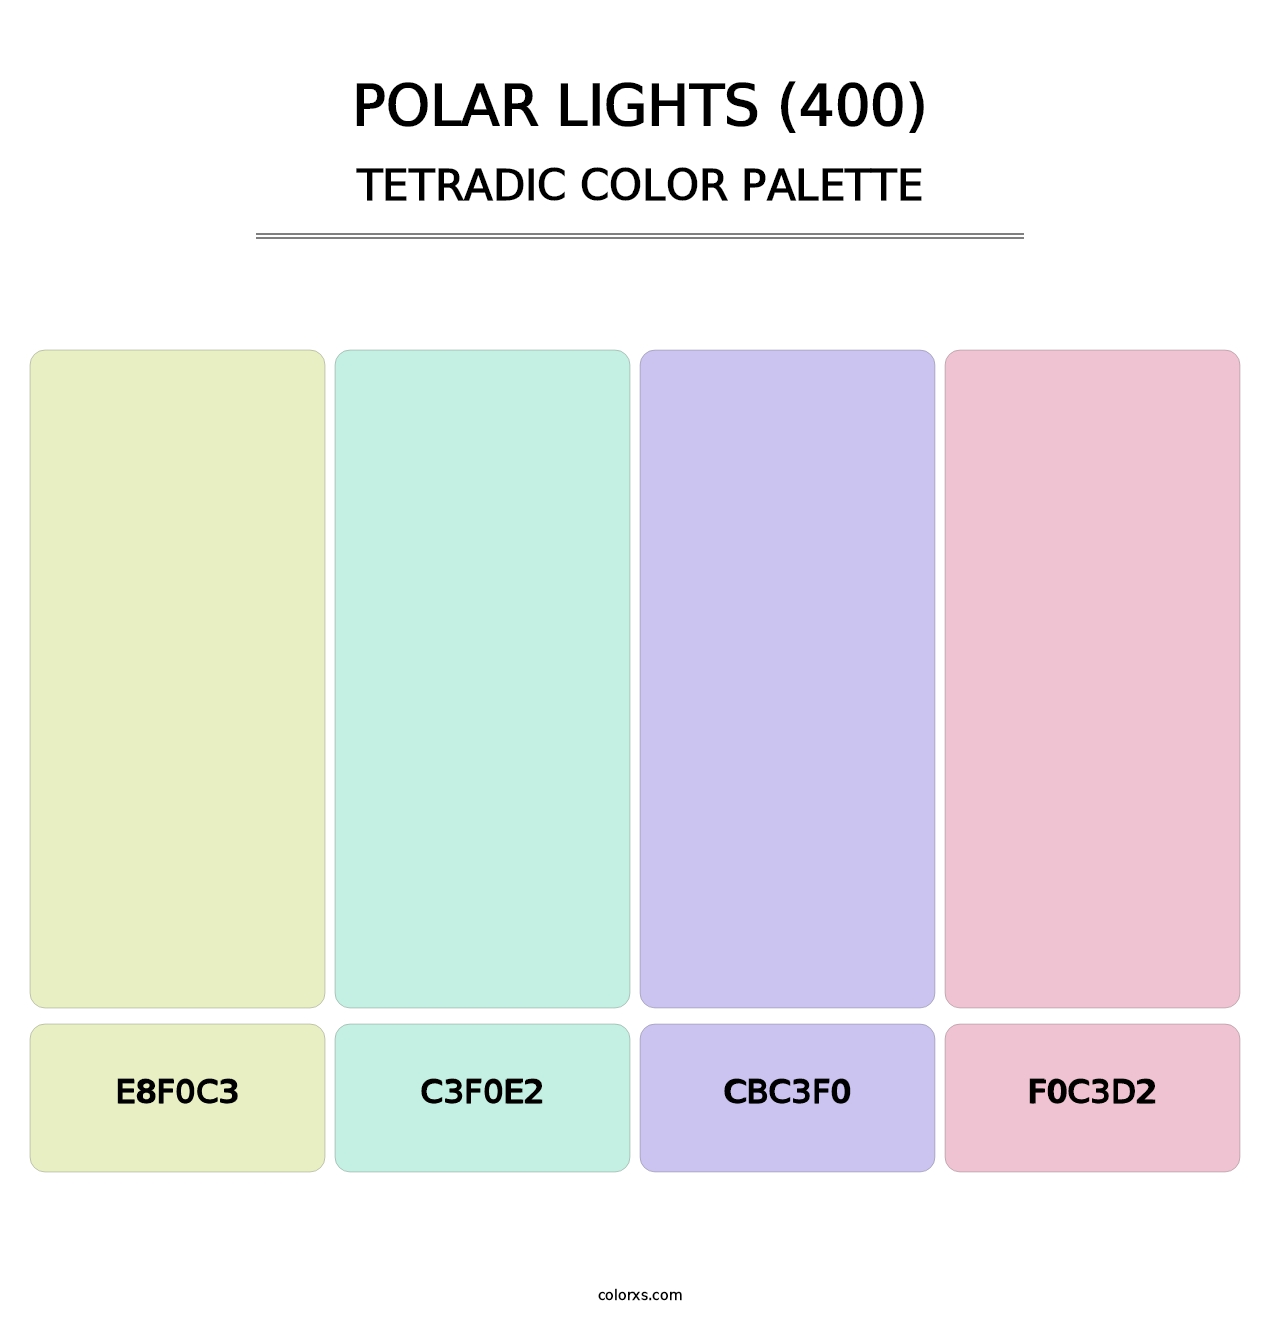 Polar Lights (400) - Tetradic Color Palette